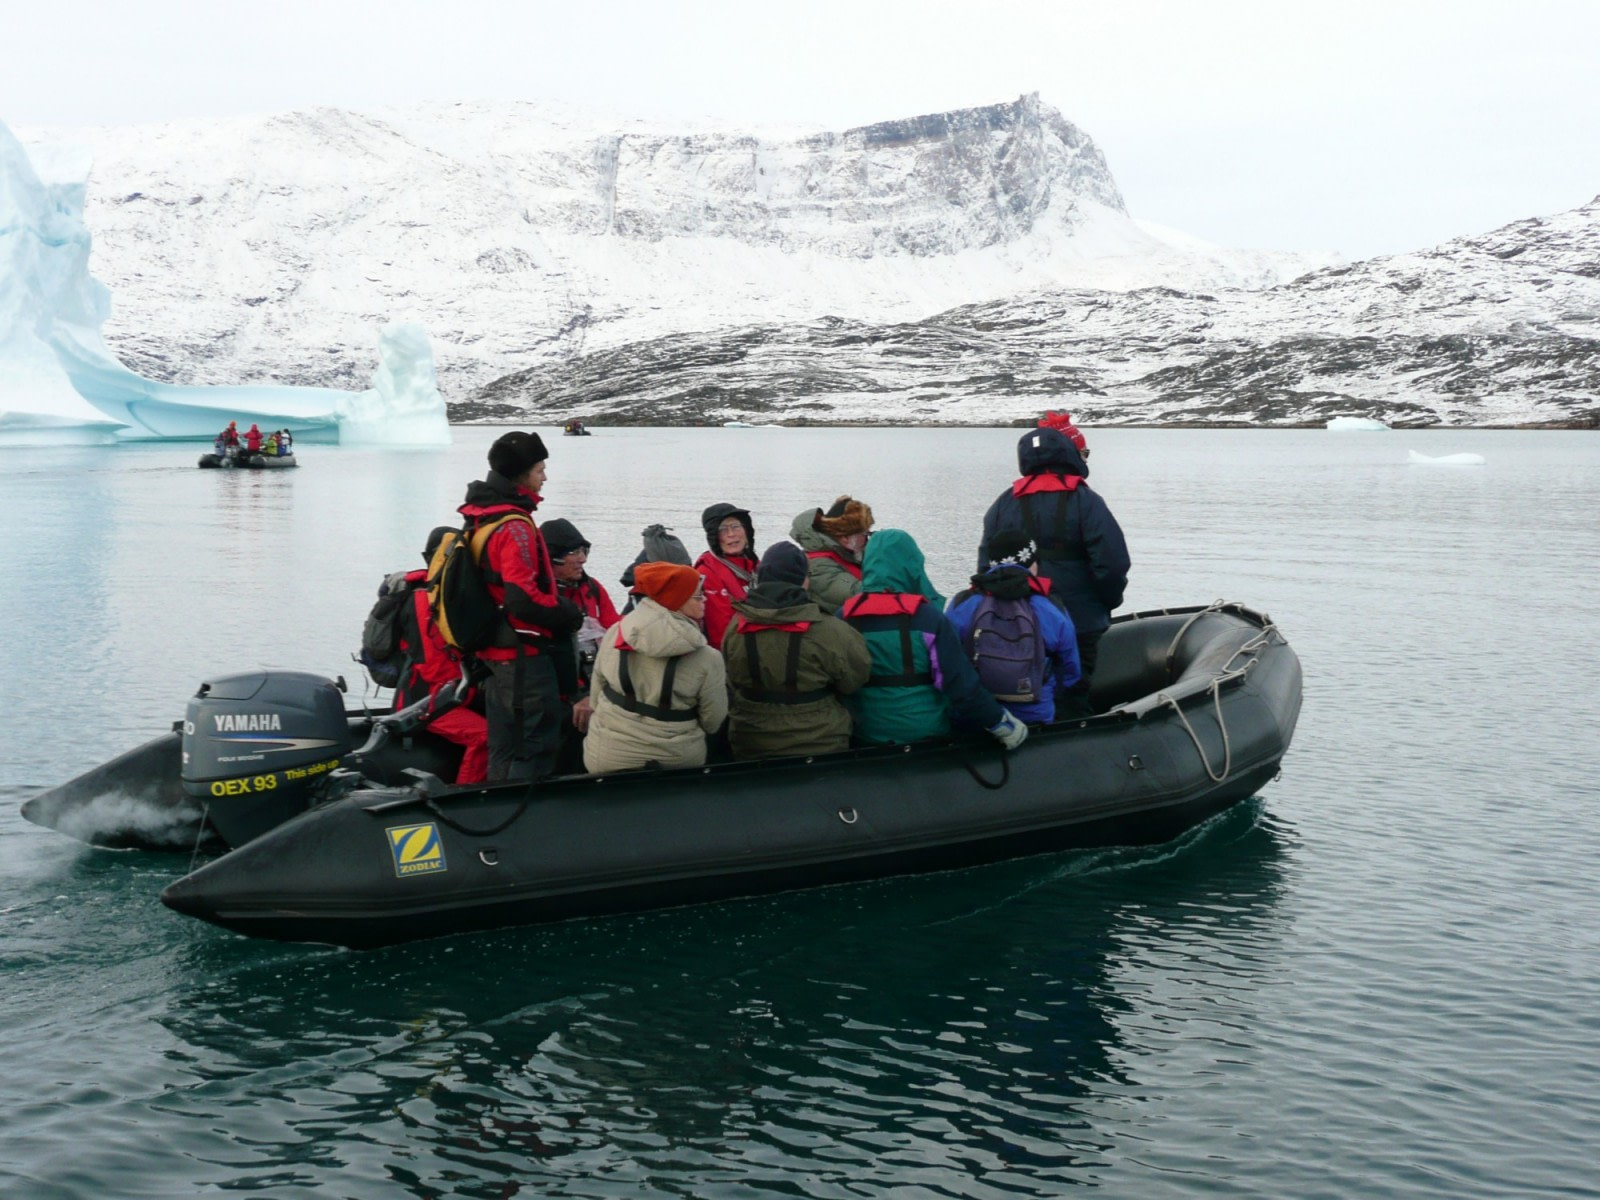 Zodiac cruising in the Arctic